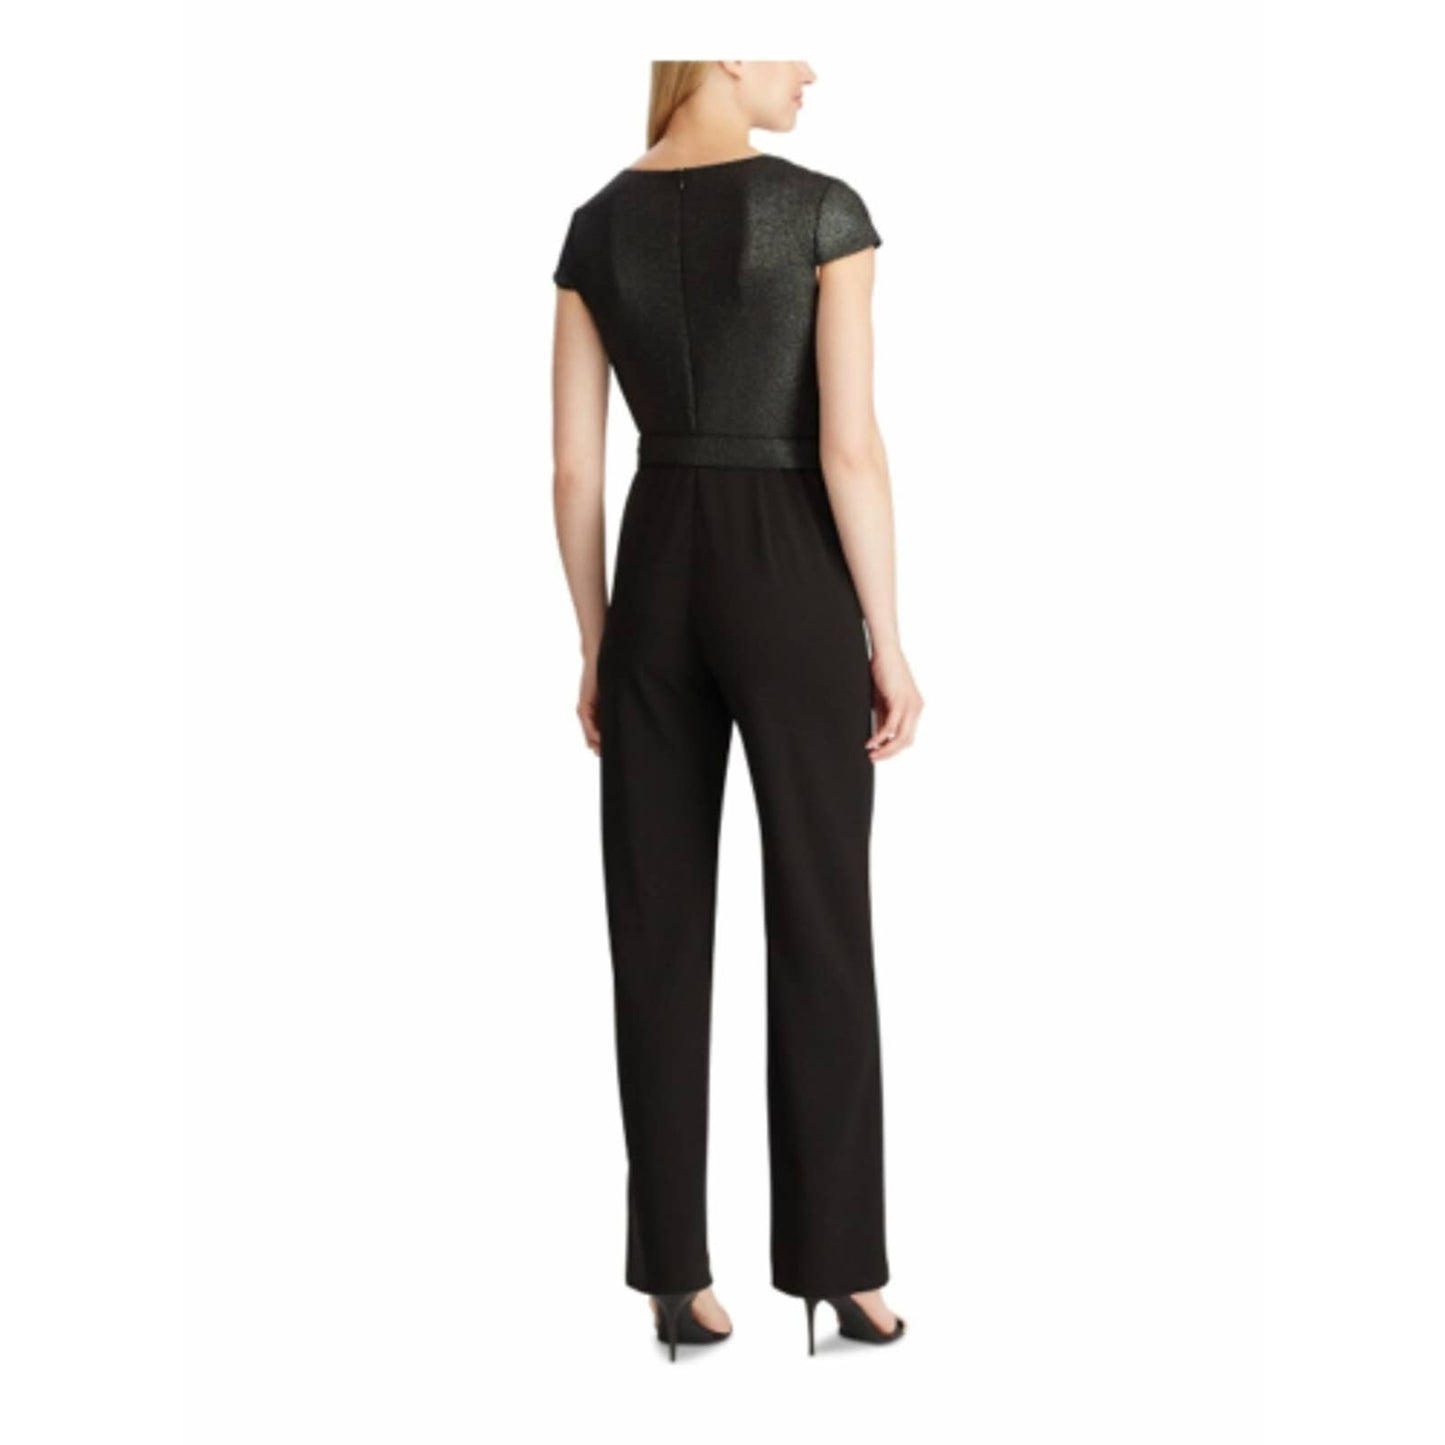 Ralph Lauren Women's Surplice Jumpsuit Black Glitter Cap Sleeve V-Neck, $175